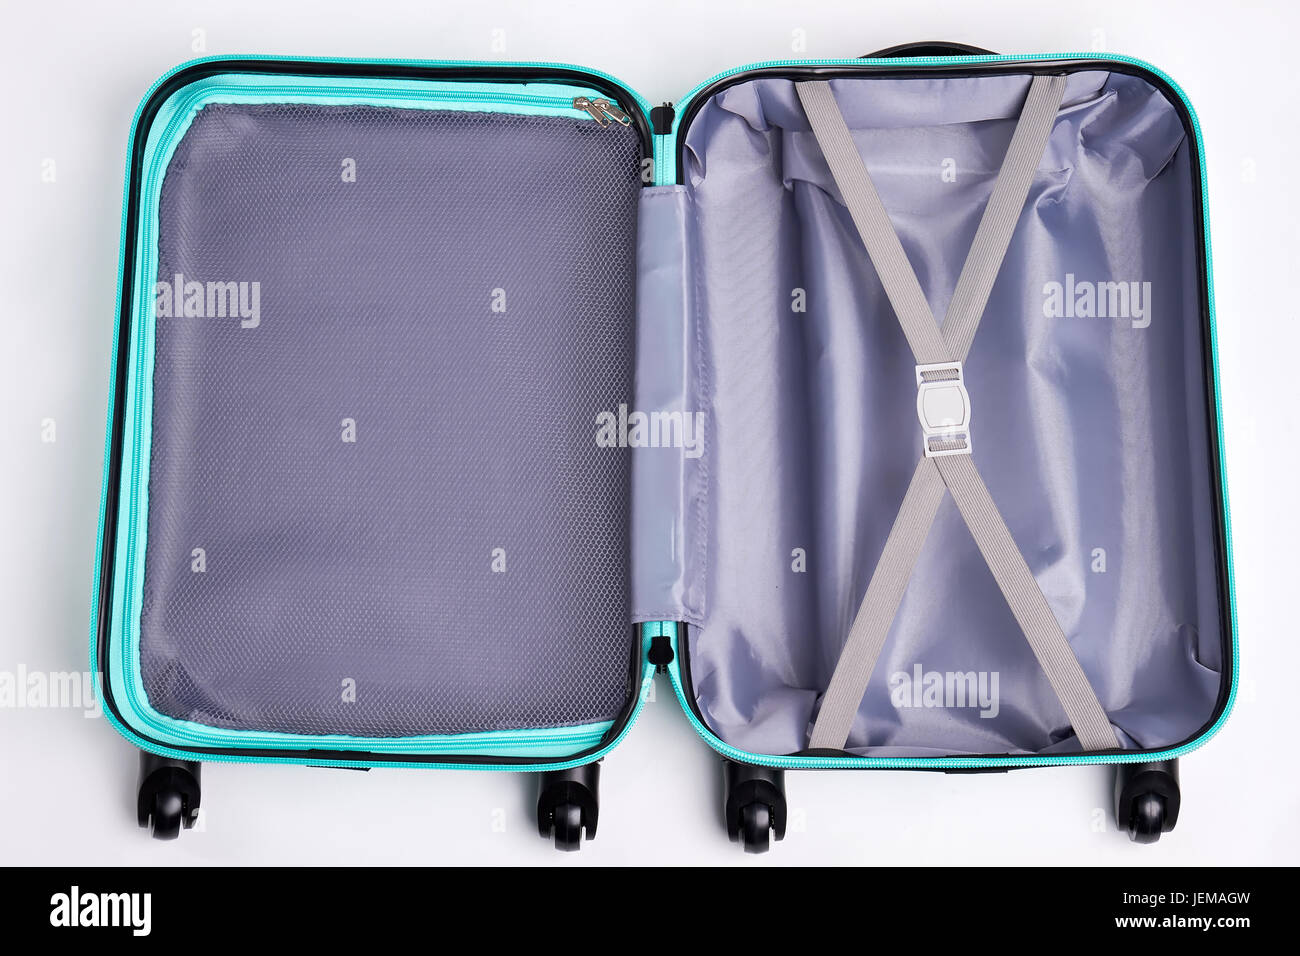 Large open fashionable suitcase. Empty luggage on wheels for journey. Stock Photo